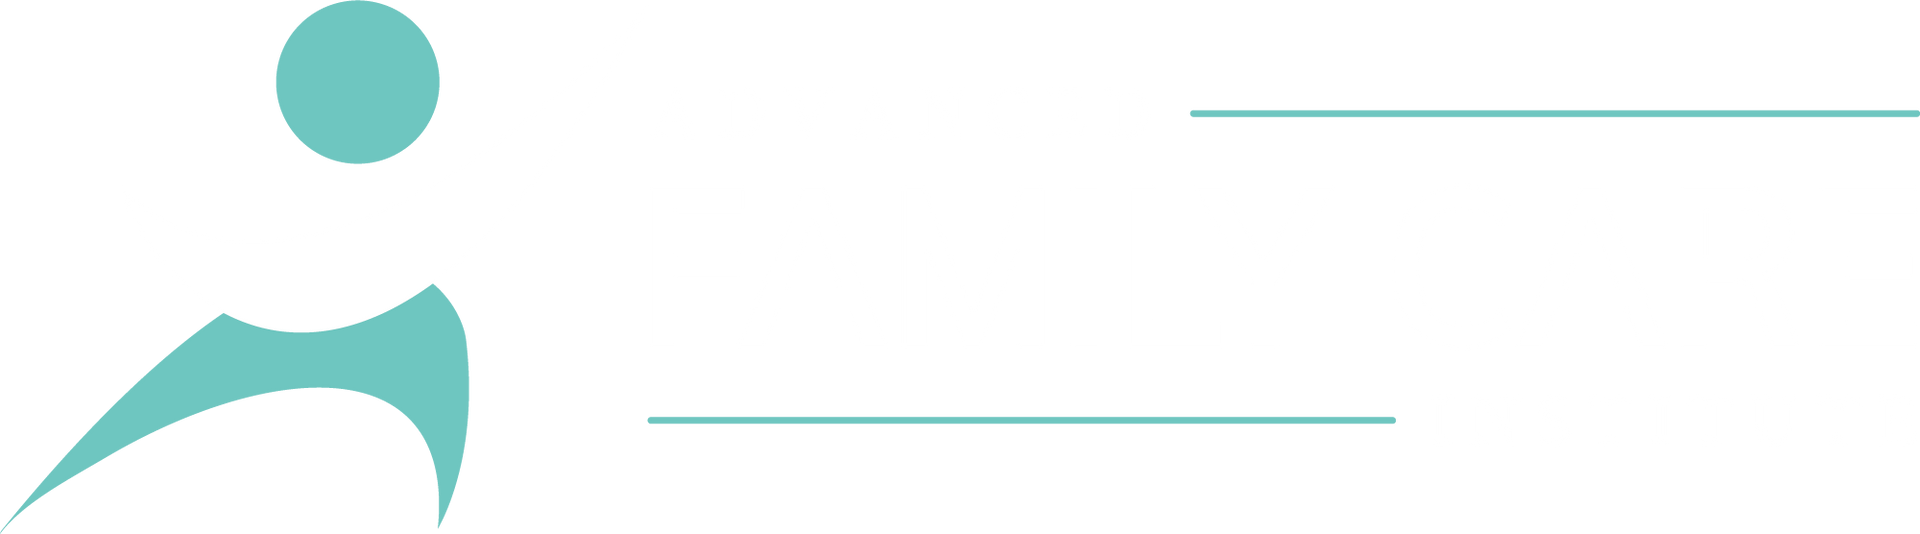 Family Care Centers of America Logo